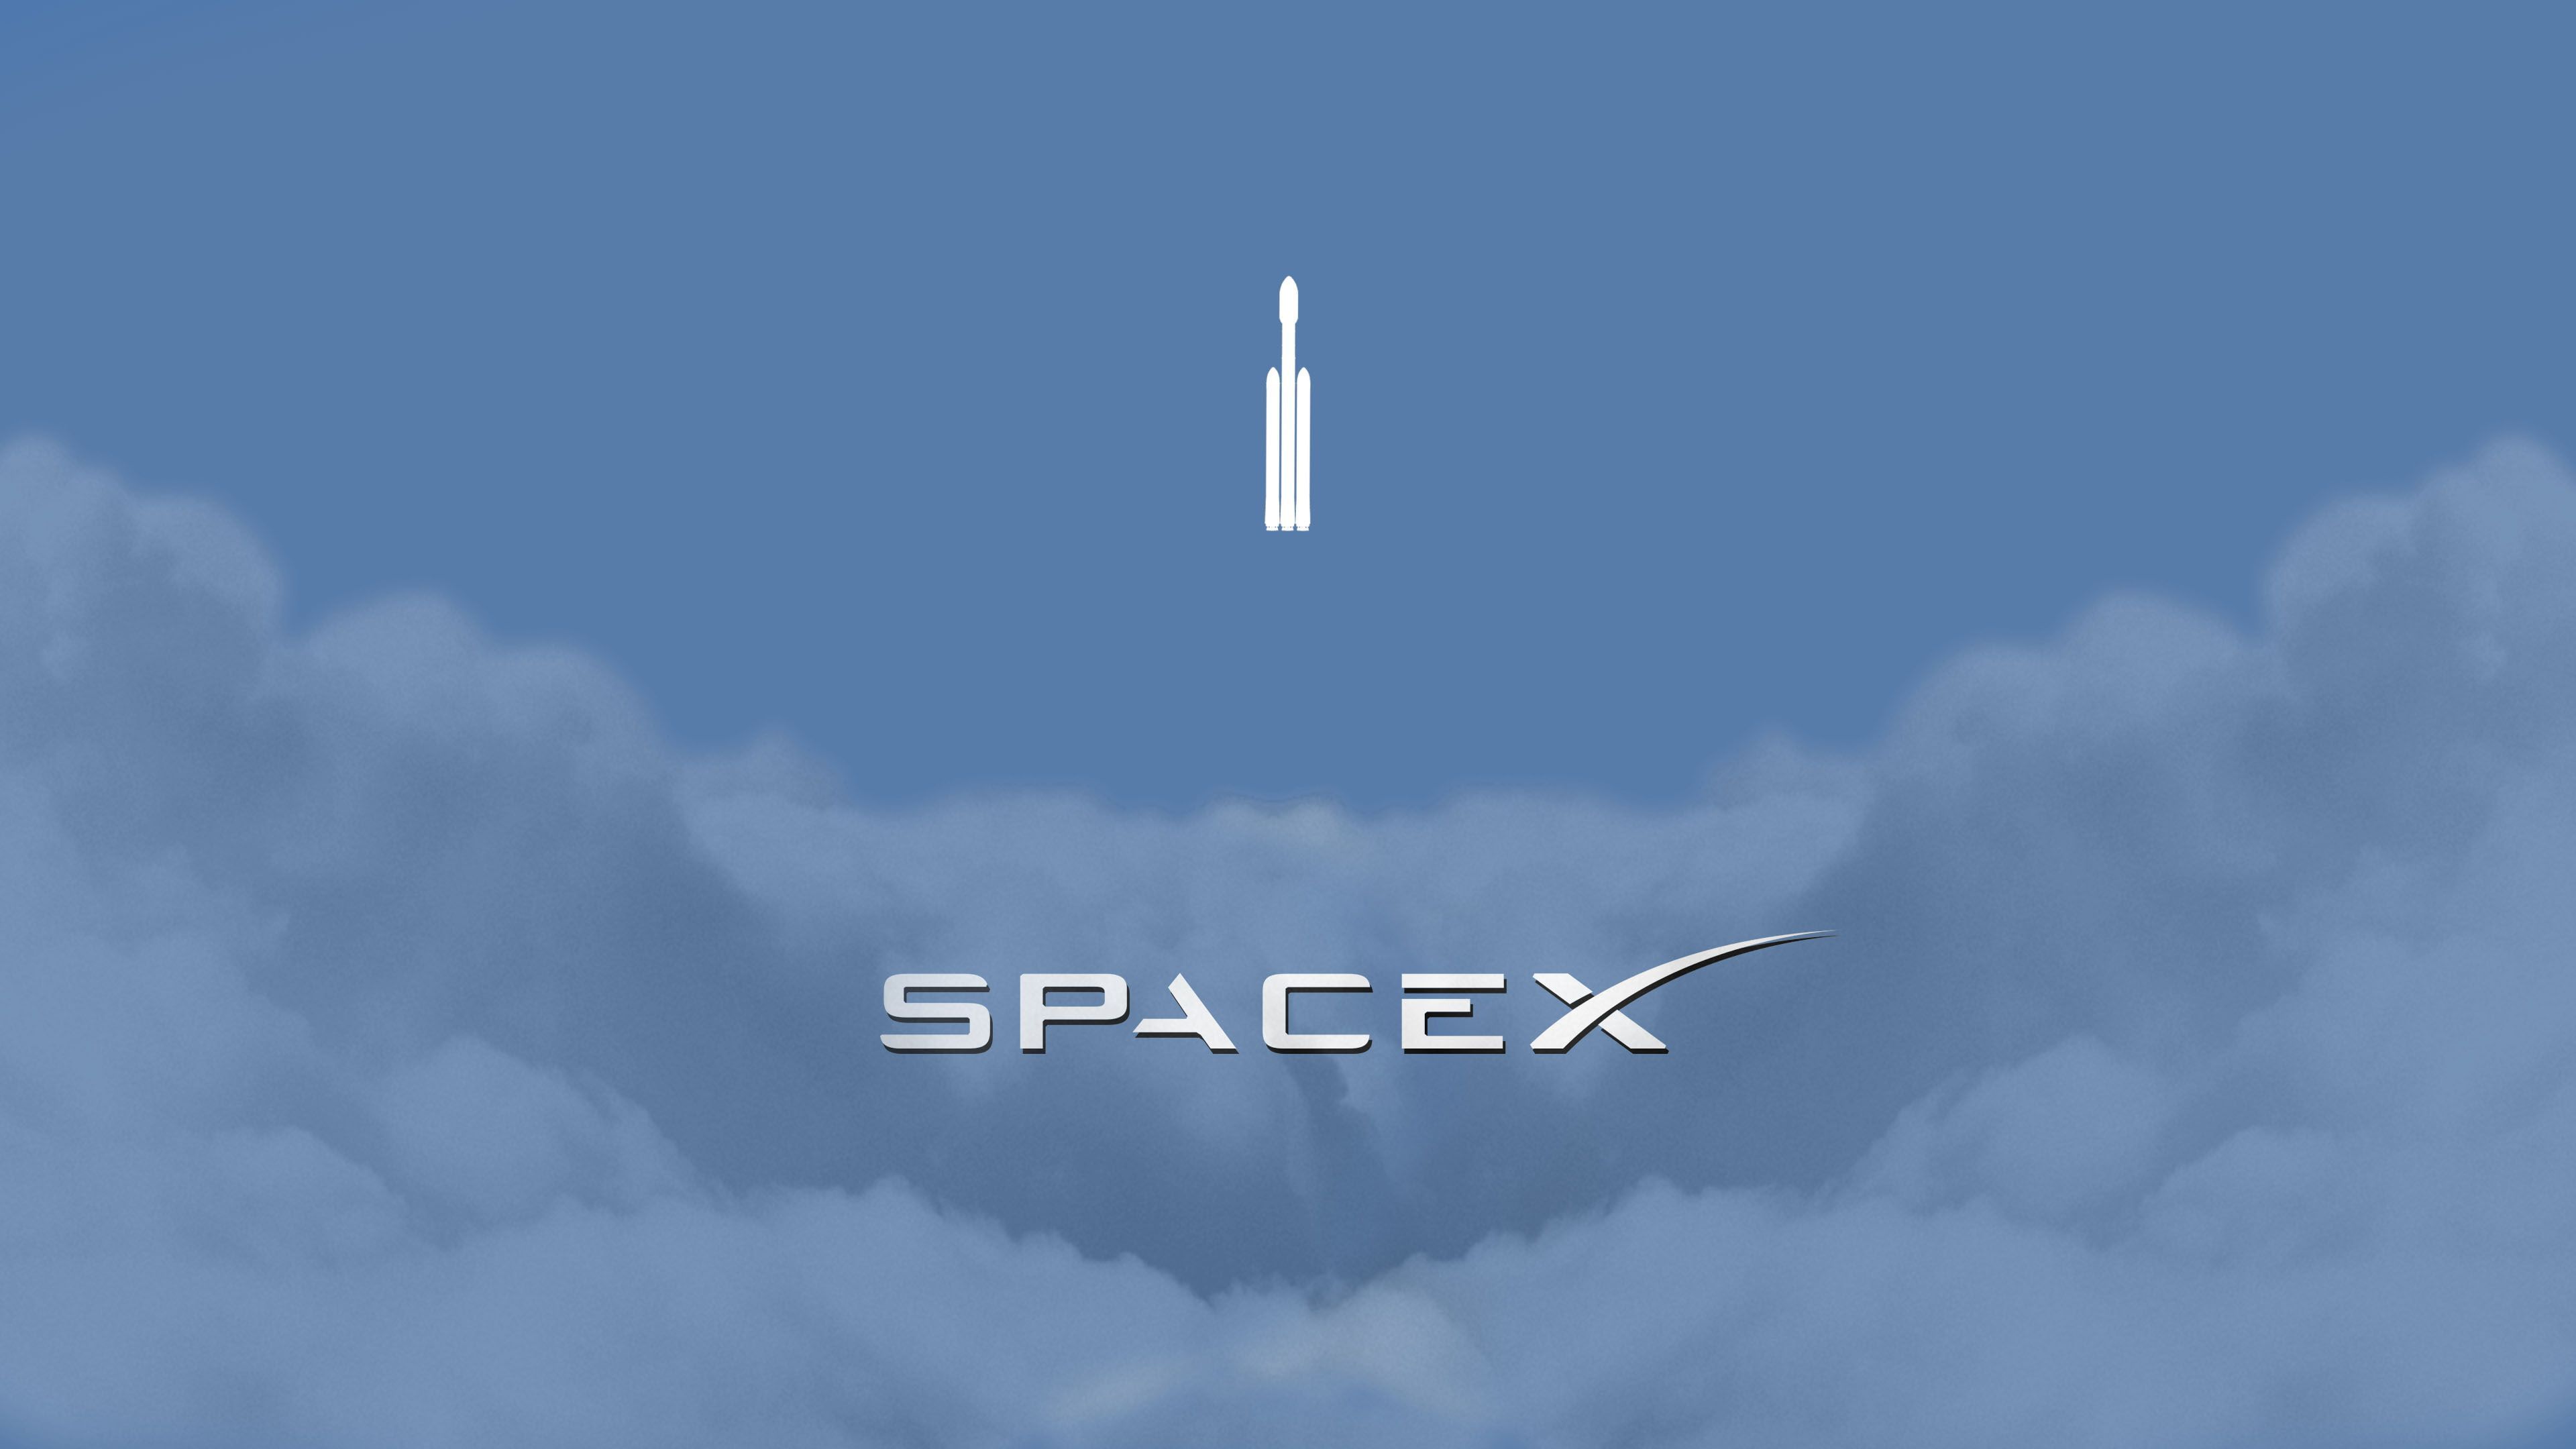 clouds #minimalism Falcon Heavy #spaceship #space #logo #rocket #SpaceX Elon Musk K #wallpaper #hdwallpa. iPhone wallpaper usa, Spacex, Galaxy wallpaper iphone